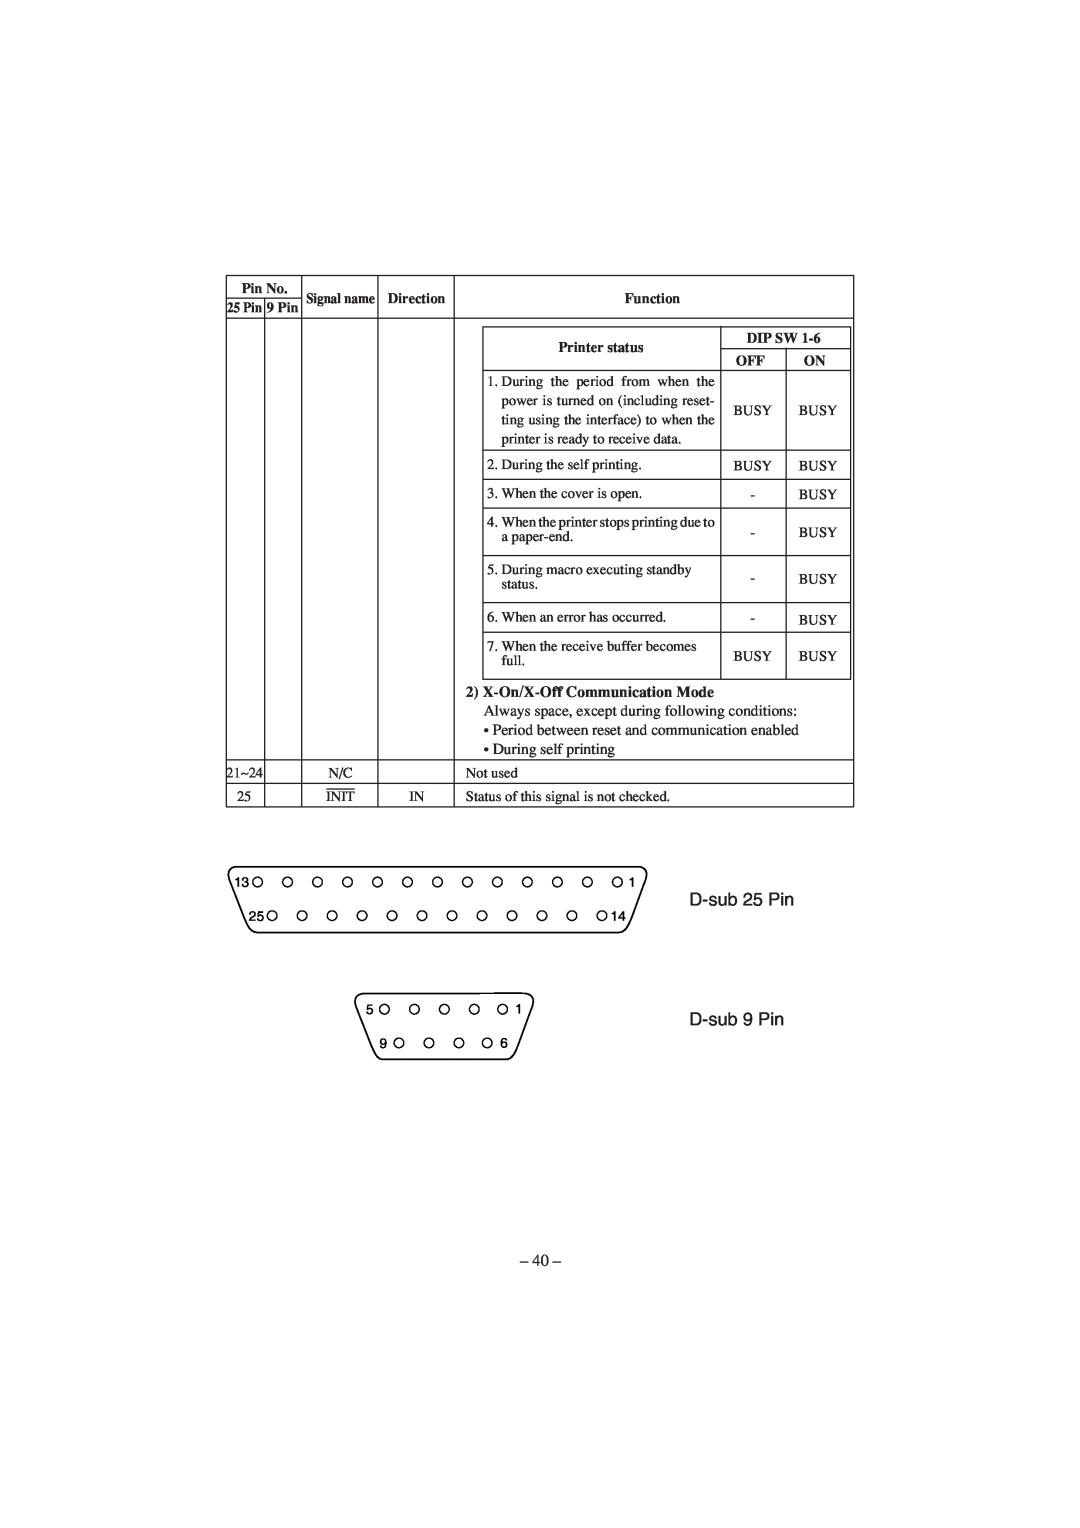 Star Micronics TSP1000 user manual D-sub 25 Pin, D-sub 9 Pin, Pin No, Direction, Function, Printer status, Dip Sw 